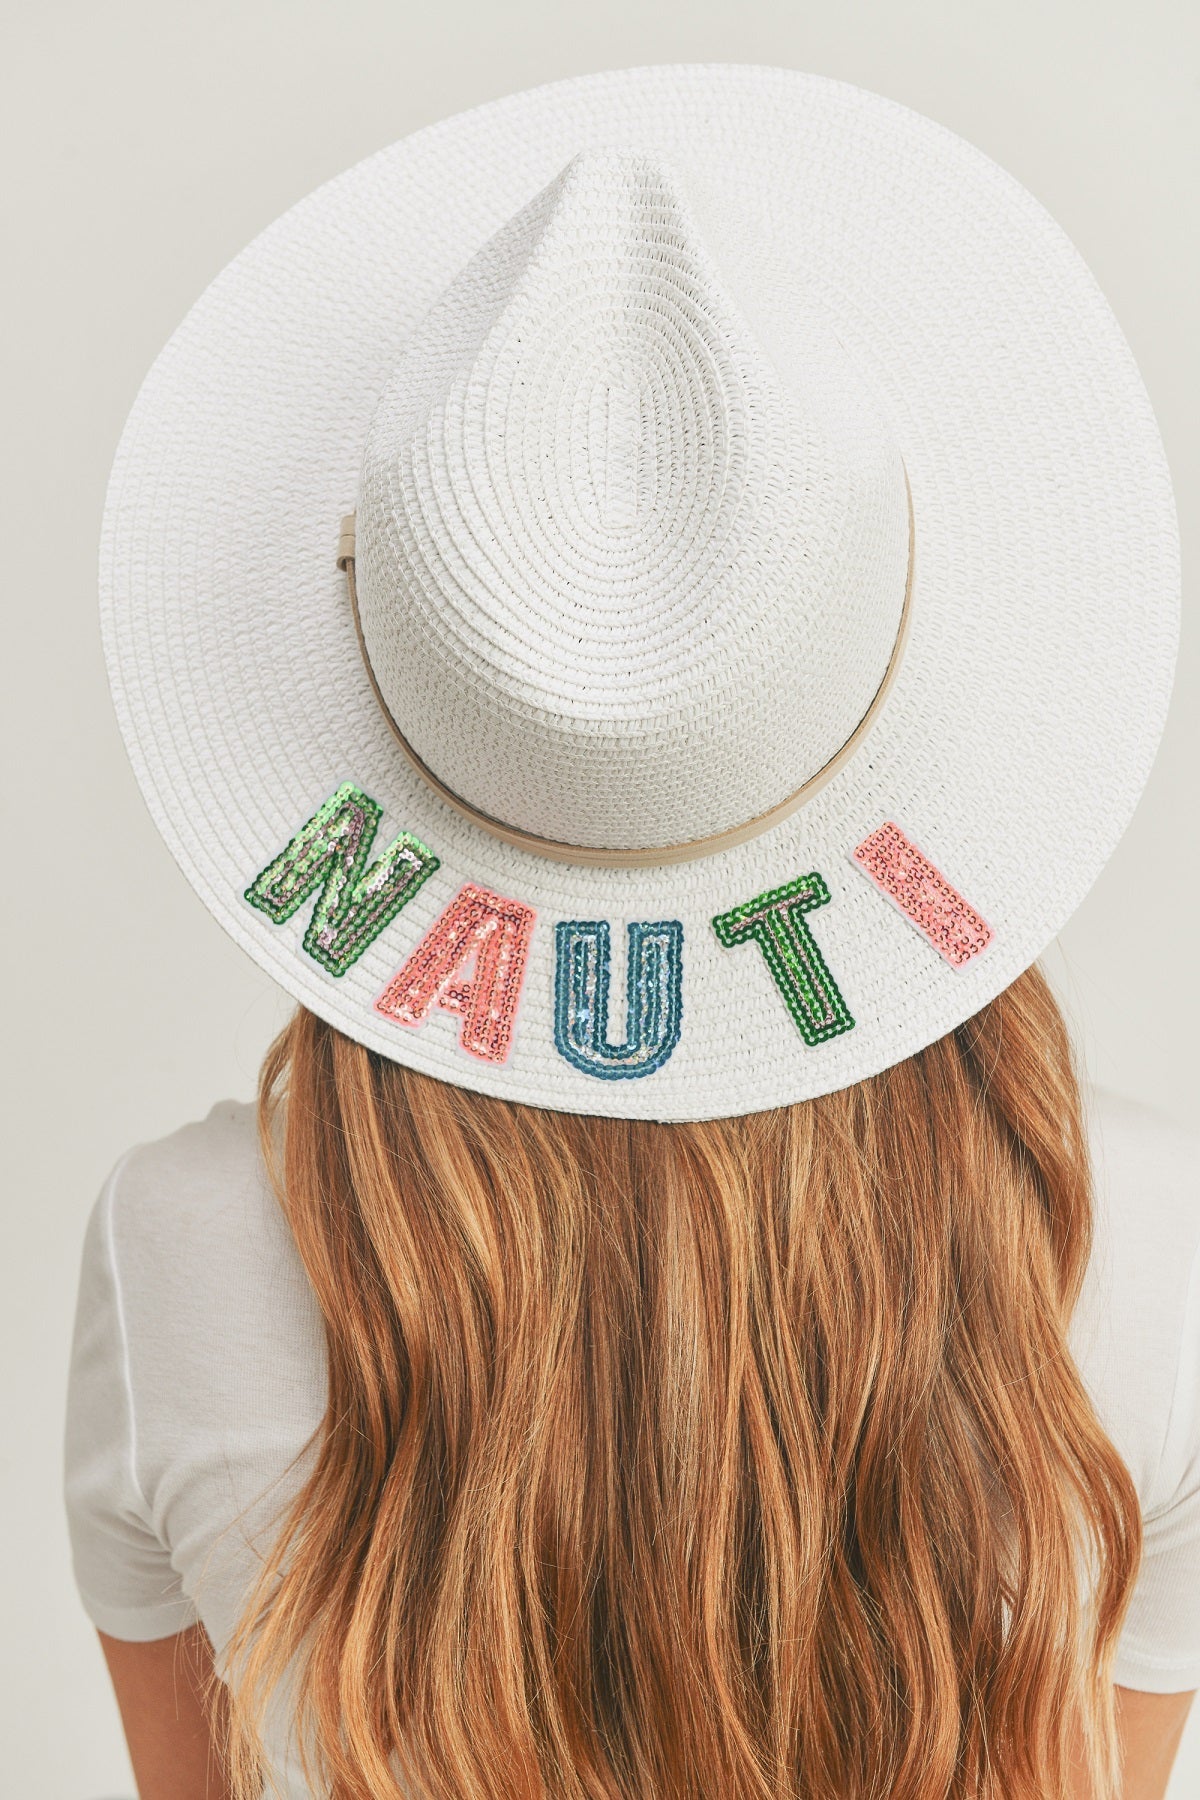 MH0119 Sequin Letter "Nauti" Panama Hat